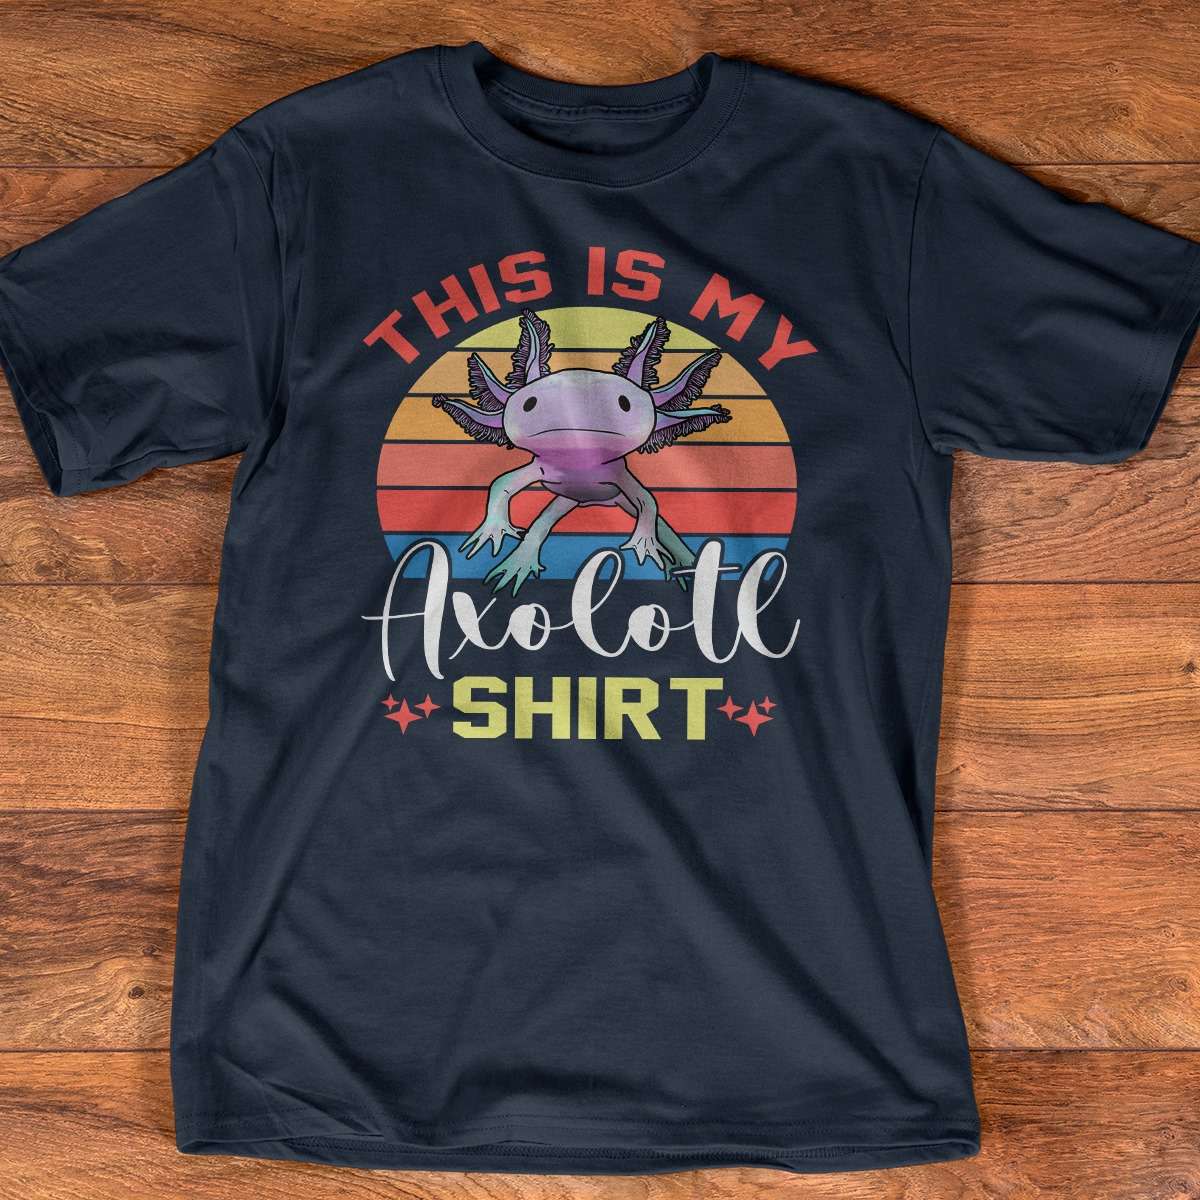 Axolotl Mexico - This is my axolotl shirt